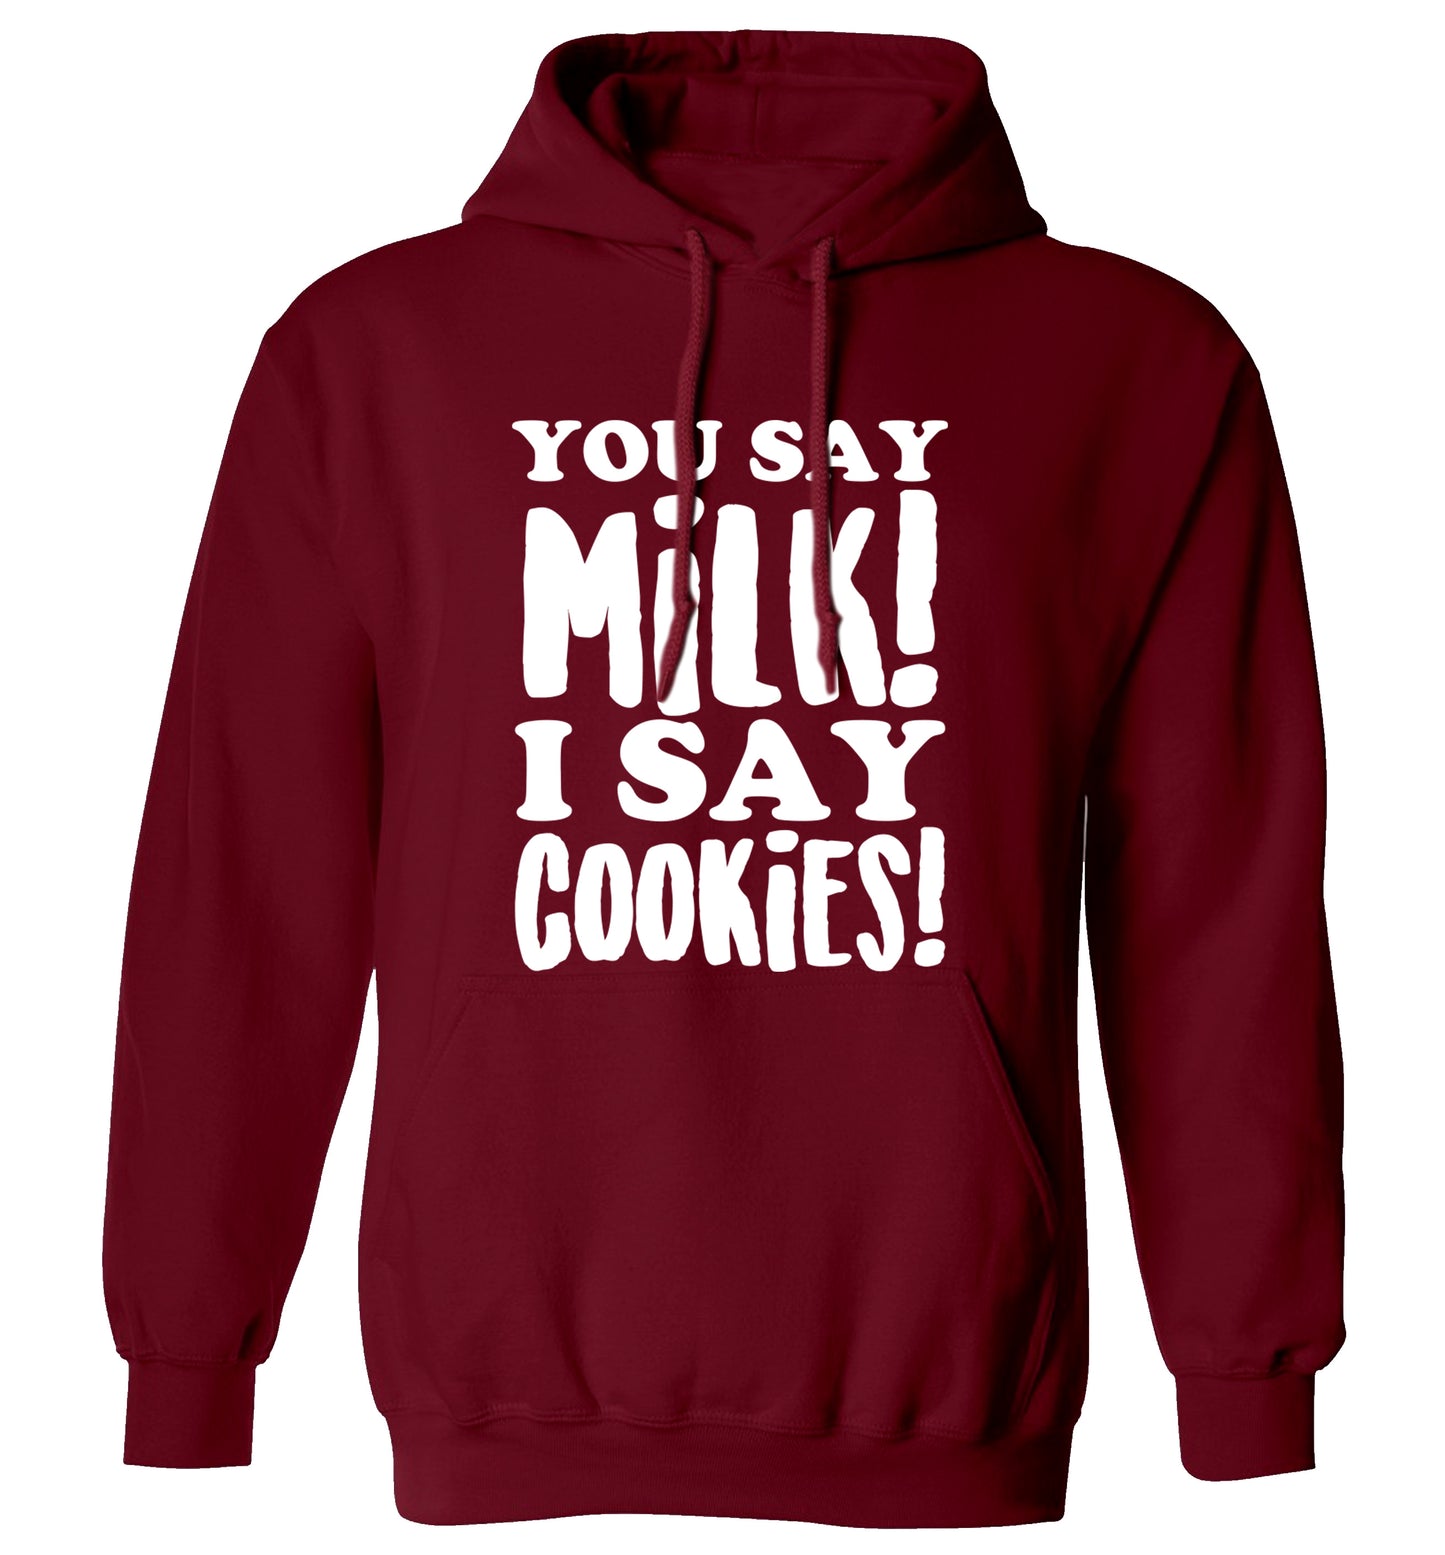 You say milk I say cookies! adults unisex maroon hoodie 2XL